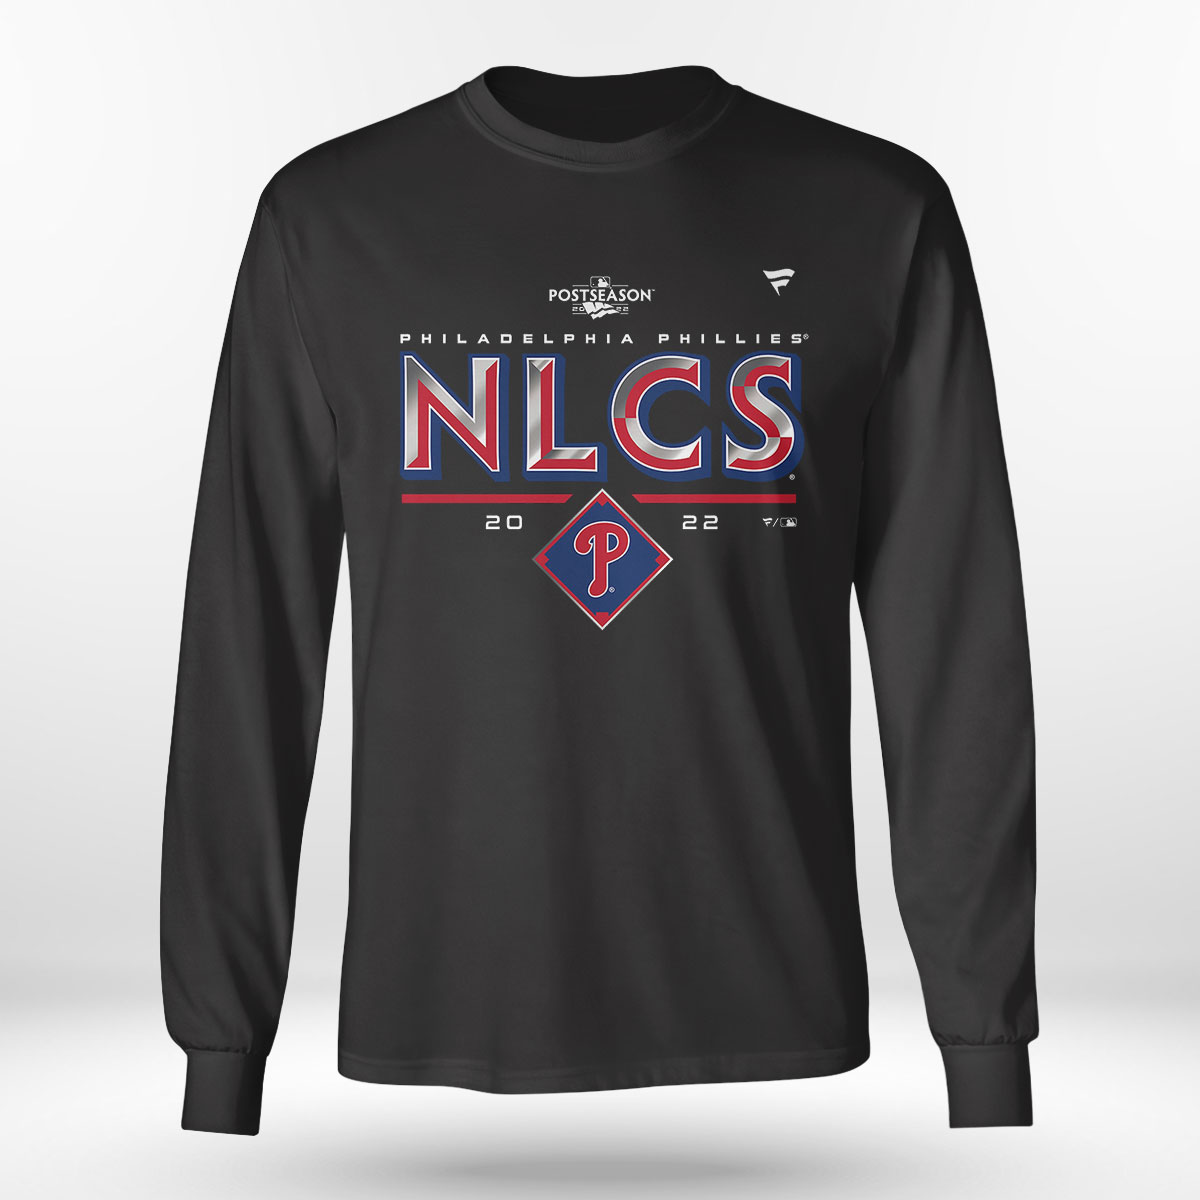 Phillies NLCS National League 3d Hoodies Philadelphia Philies Sweatshirt -  Best Seller Shirts Design In Usa